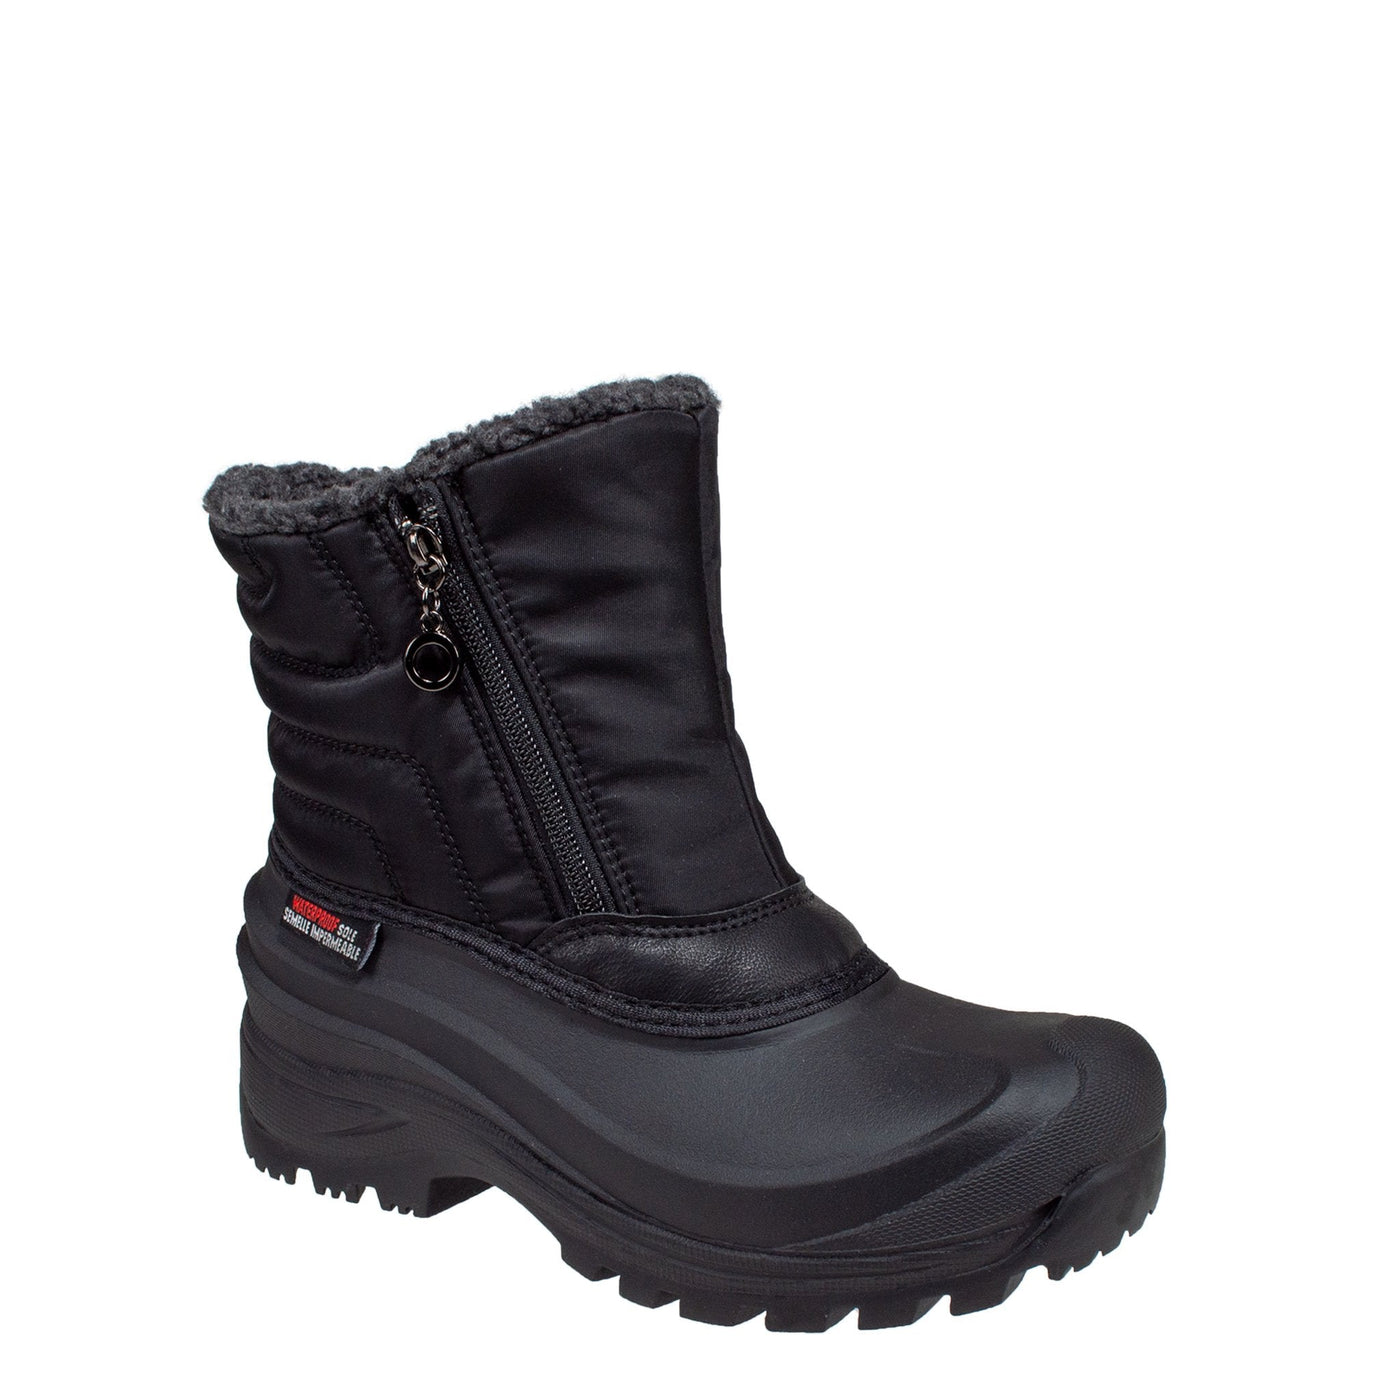 black_alternate insulated women's winter boots